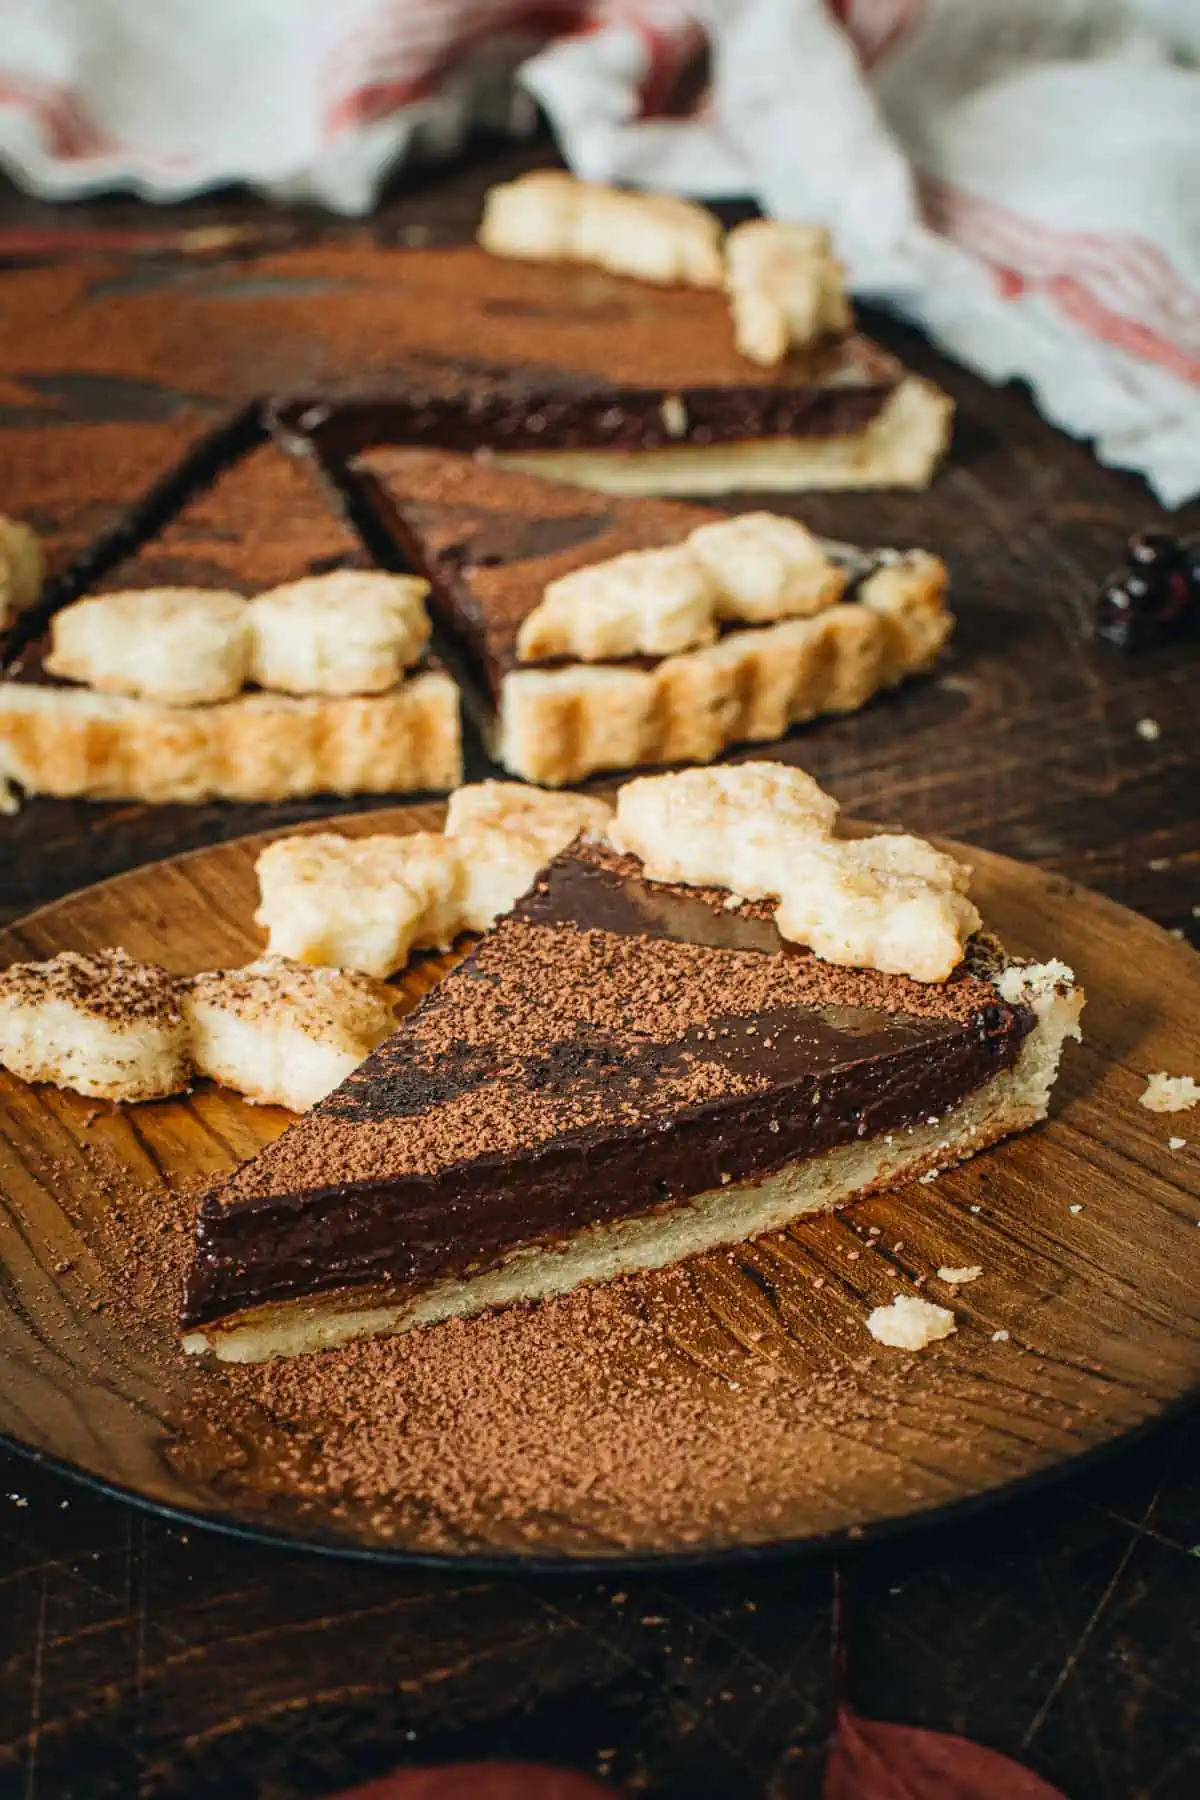 Slice of chocolate tart on a dessert plate.